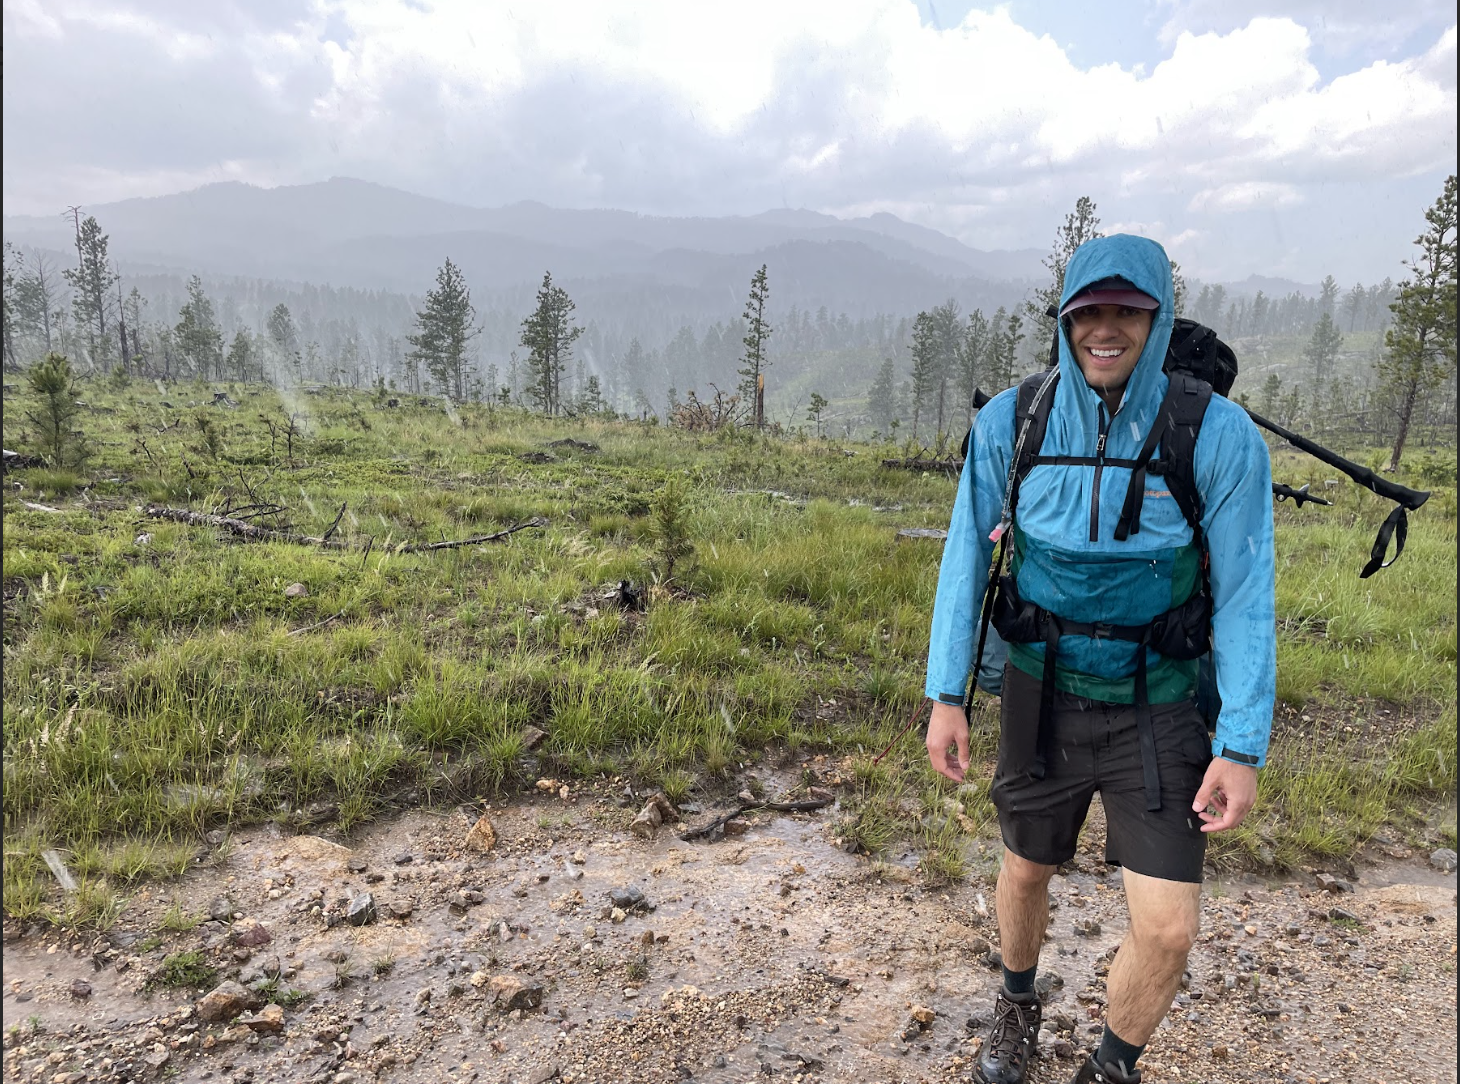 A hiker wearing a blue rainjacket while on a trail